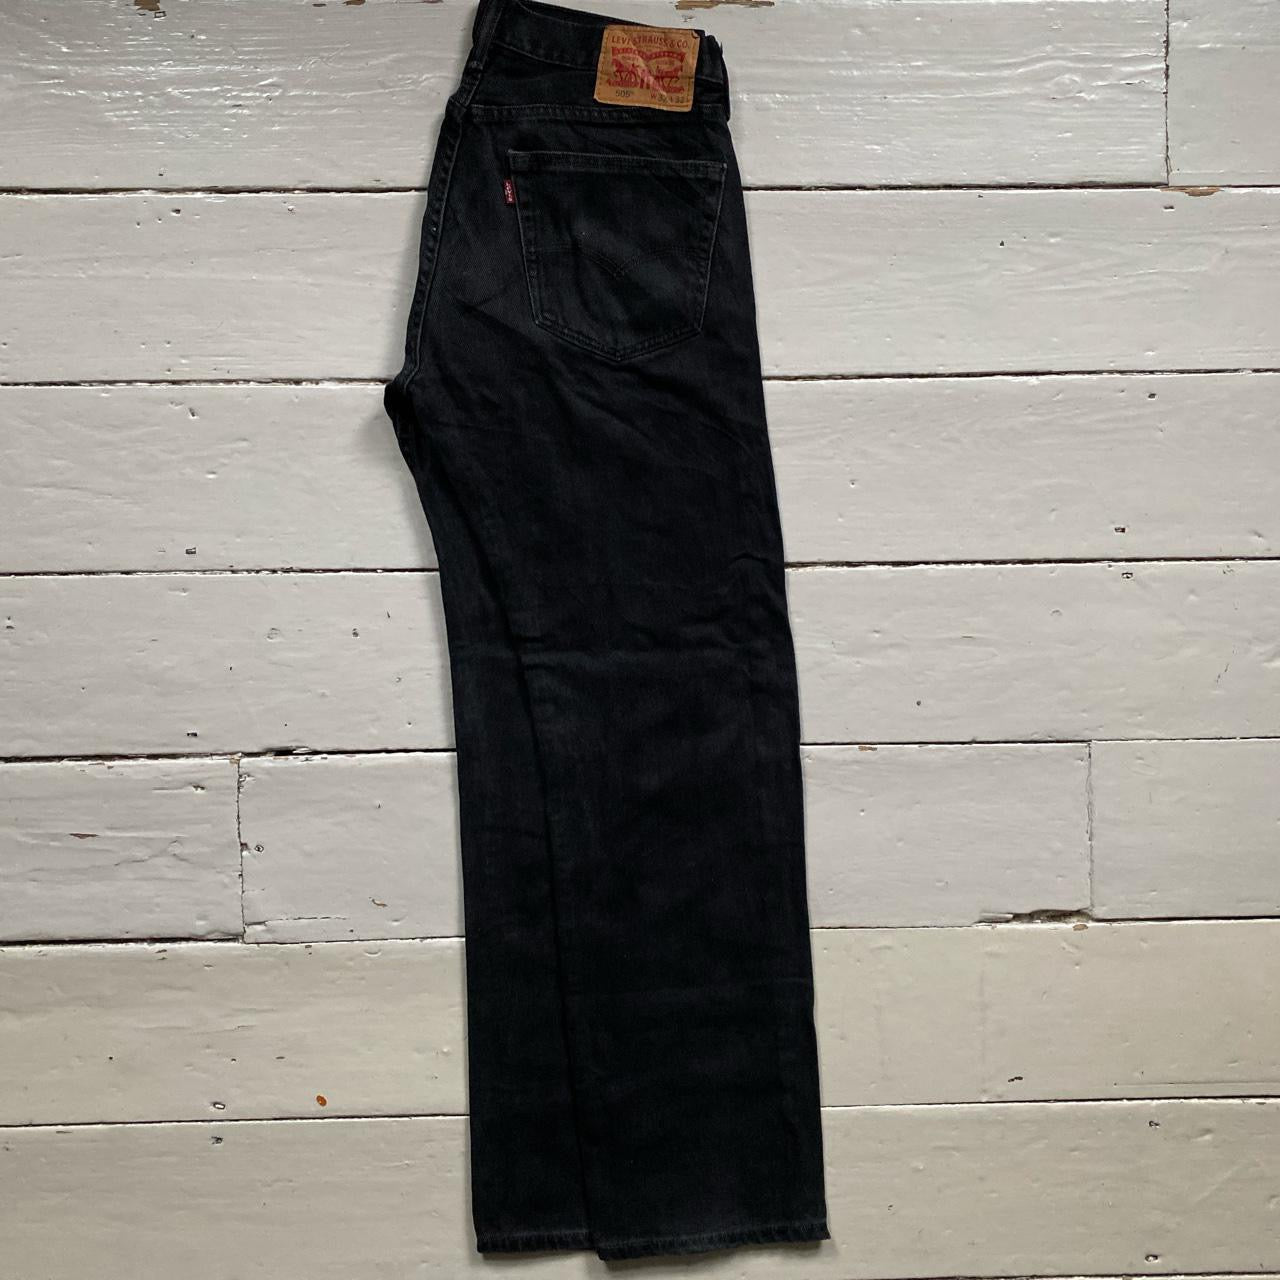 Levis 505 Black Distressed Jeans (32/31)